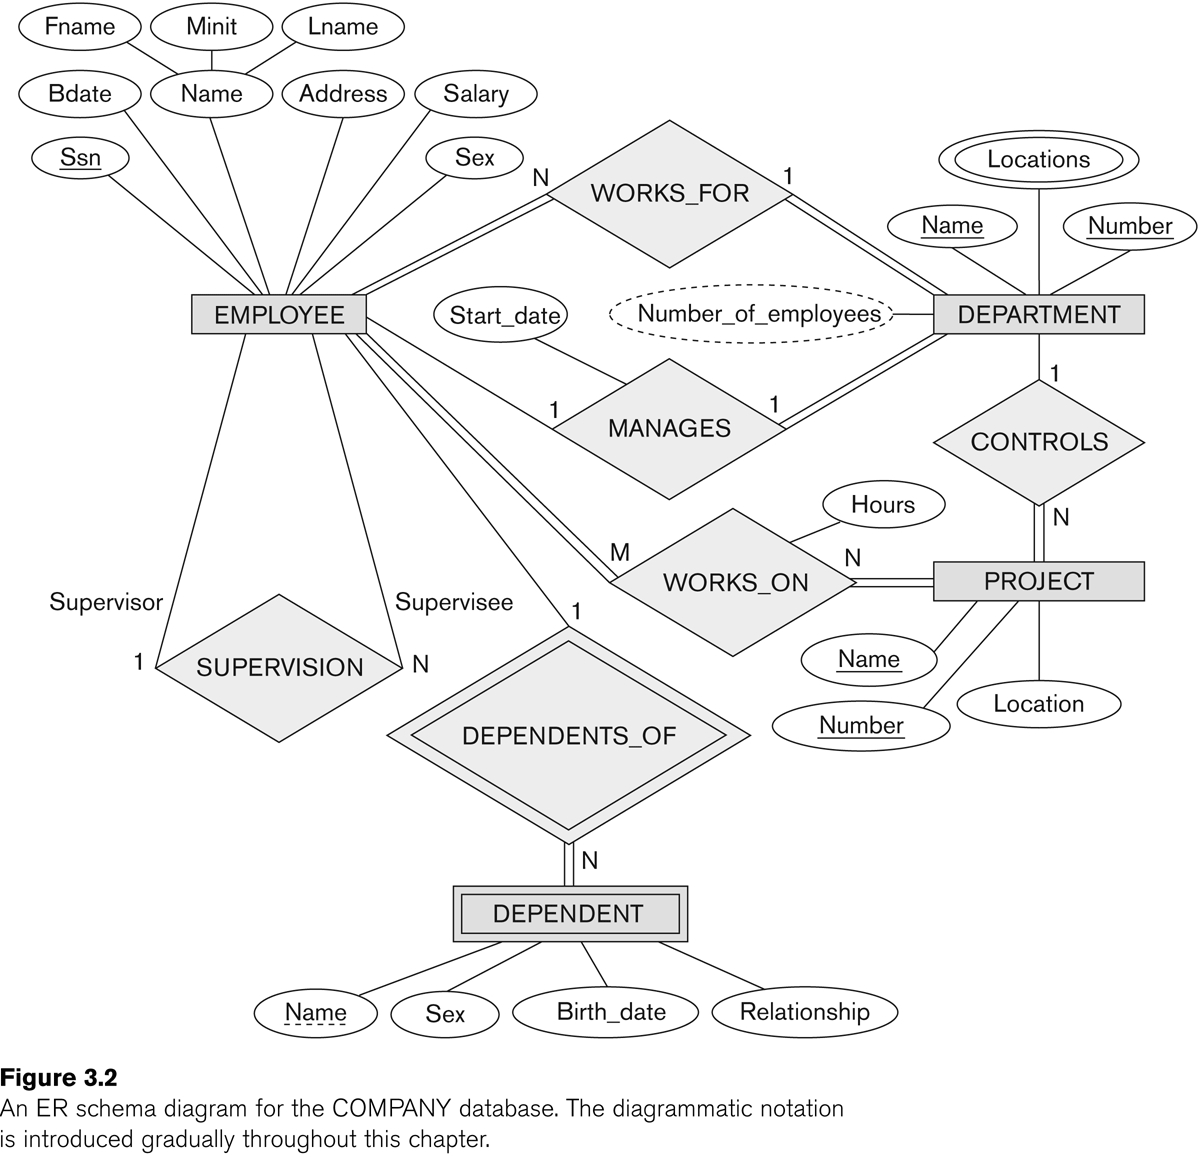 Entity-Relationship Modeling intended for Entity Relationship Model Diagram